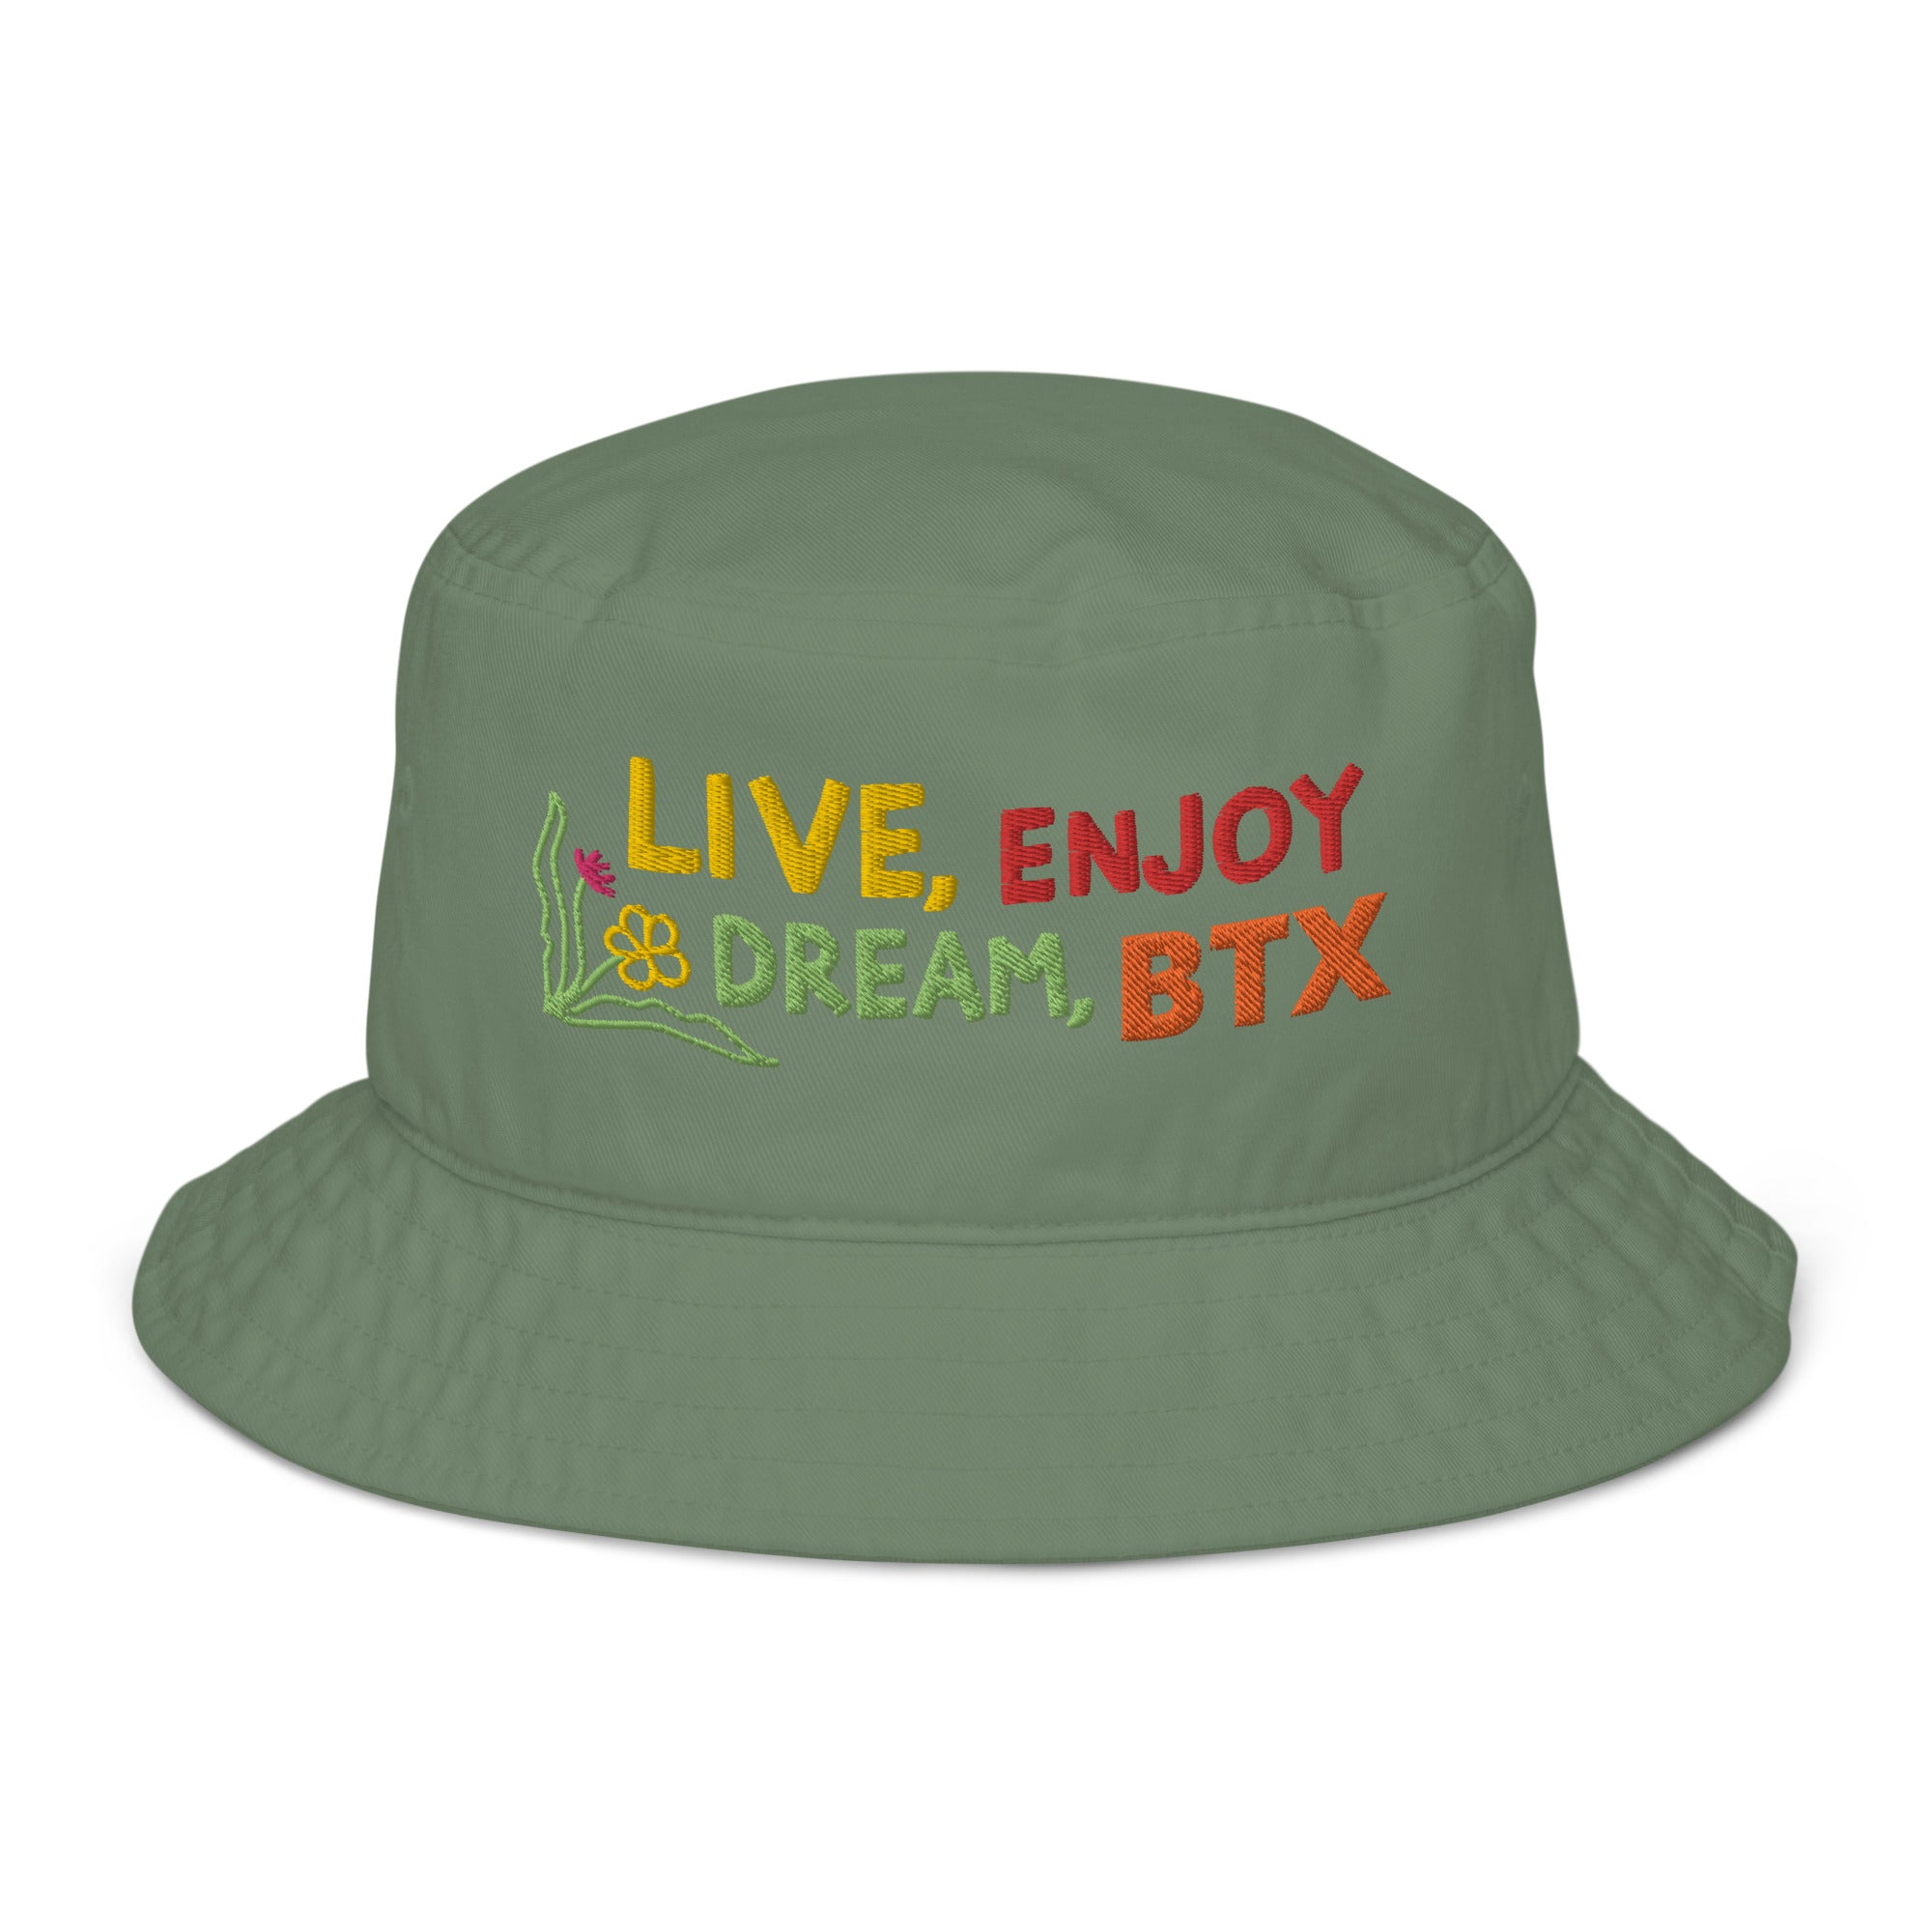 Dream BTX Bucket Hat